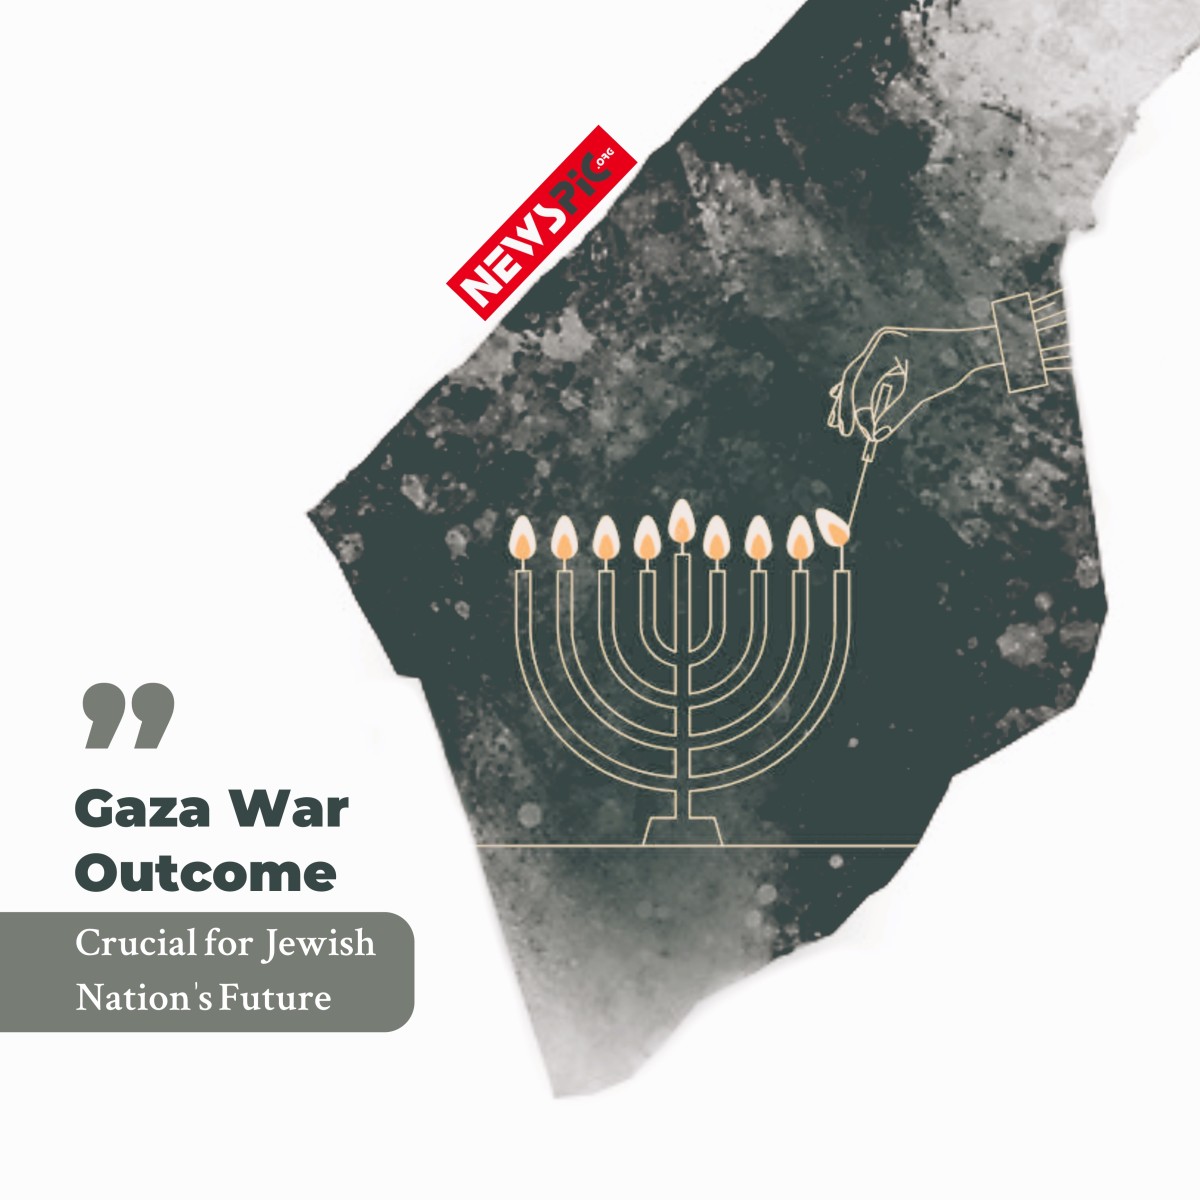 Gaza War Outcome Crucial for Jewish Nation's Future